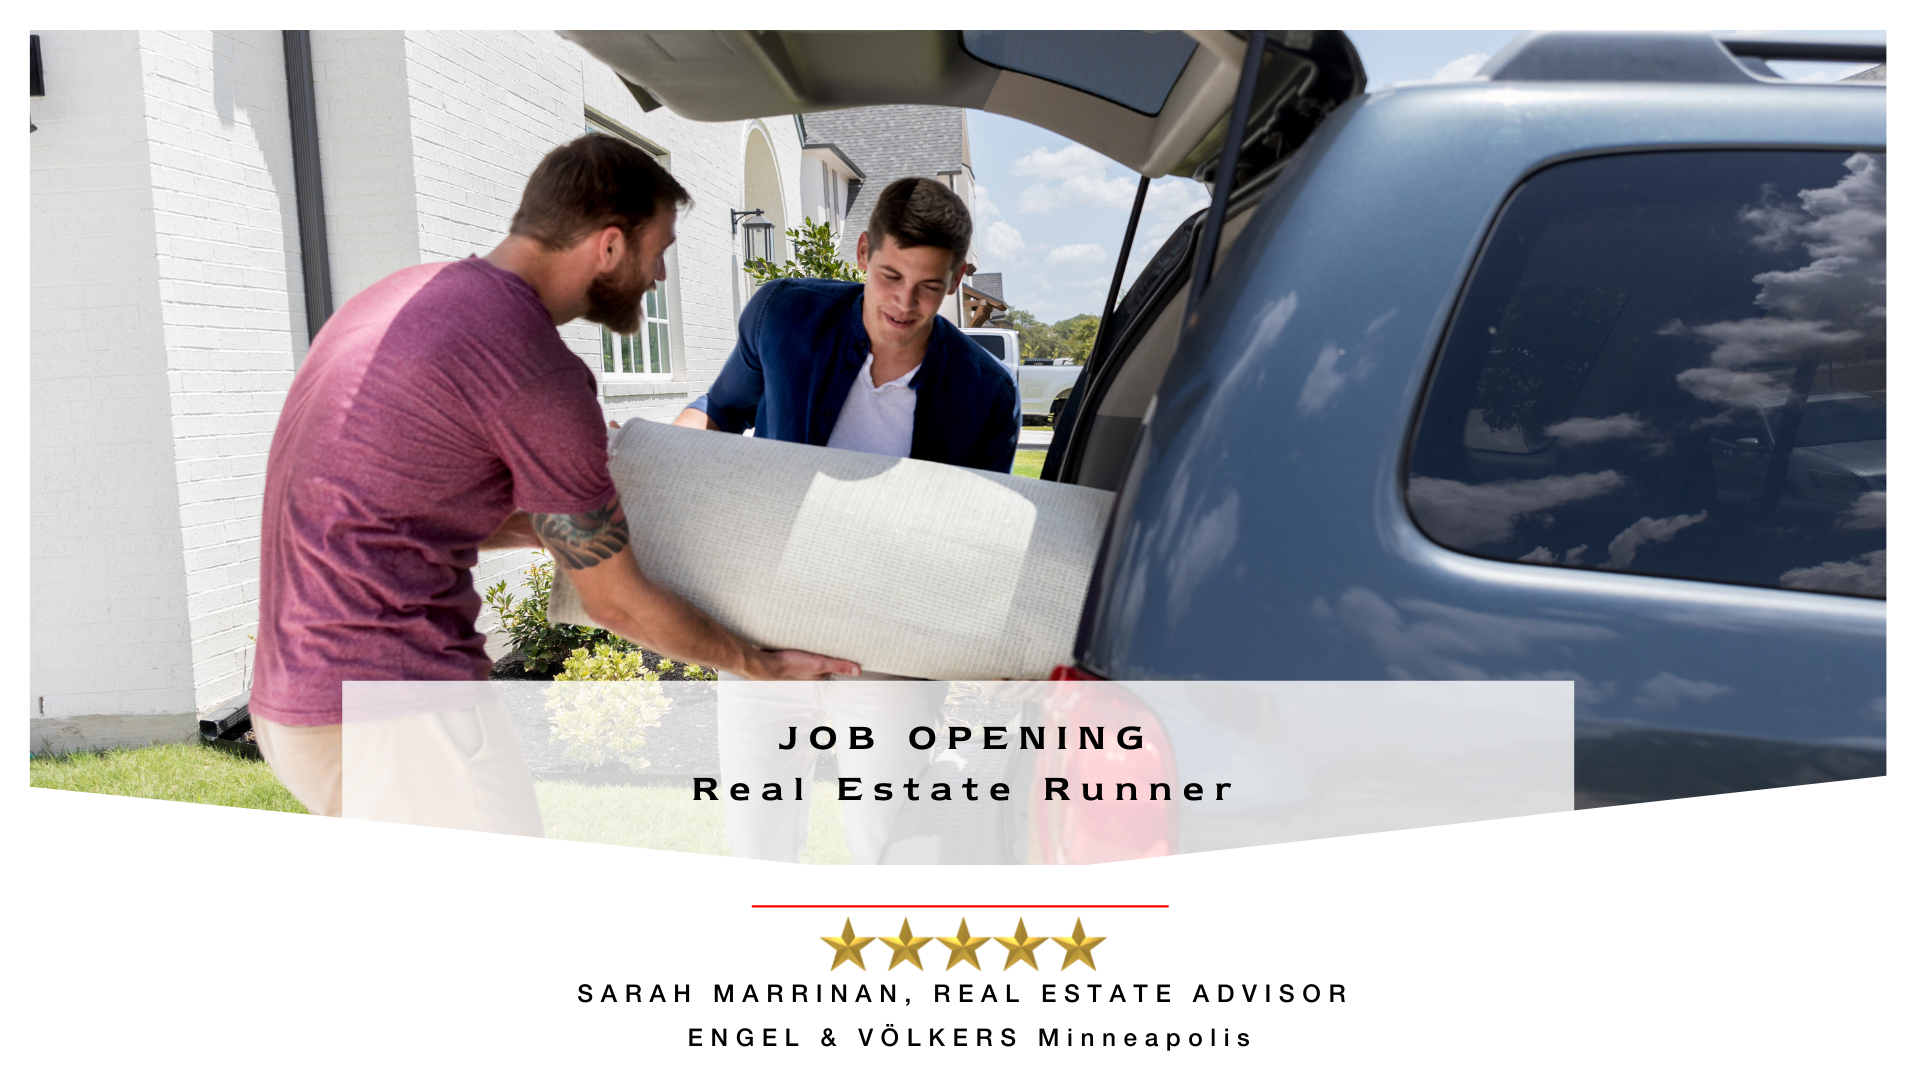 Job Opening: Real Estate Runner